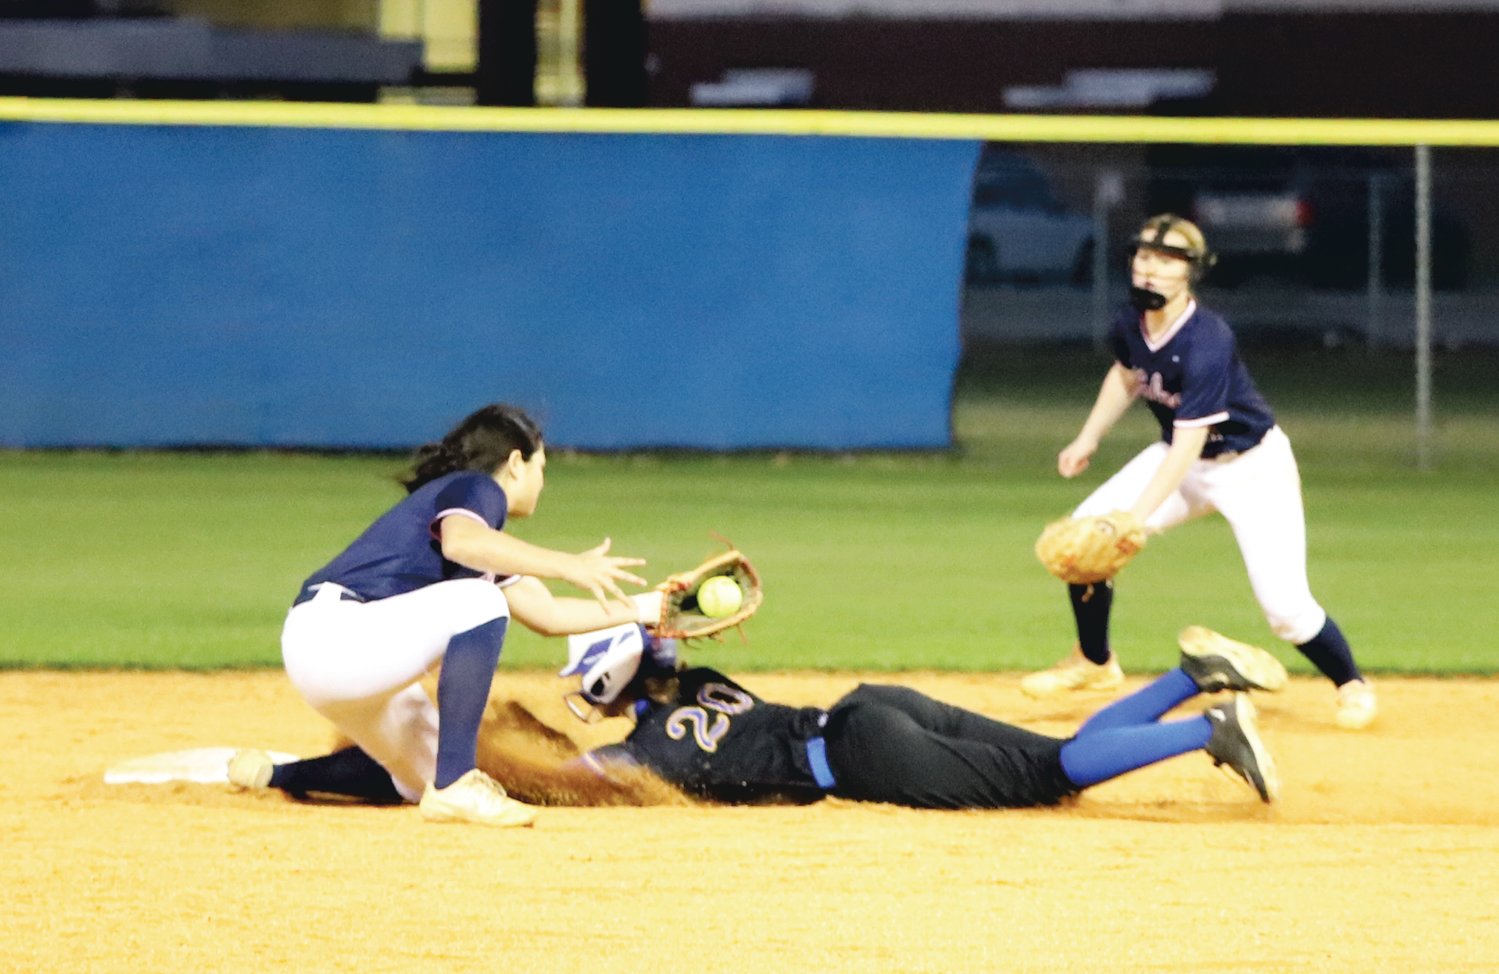 Lexington's Addison Hoffner steals second base